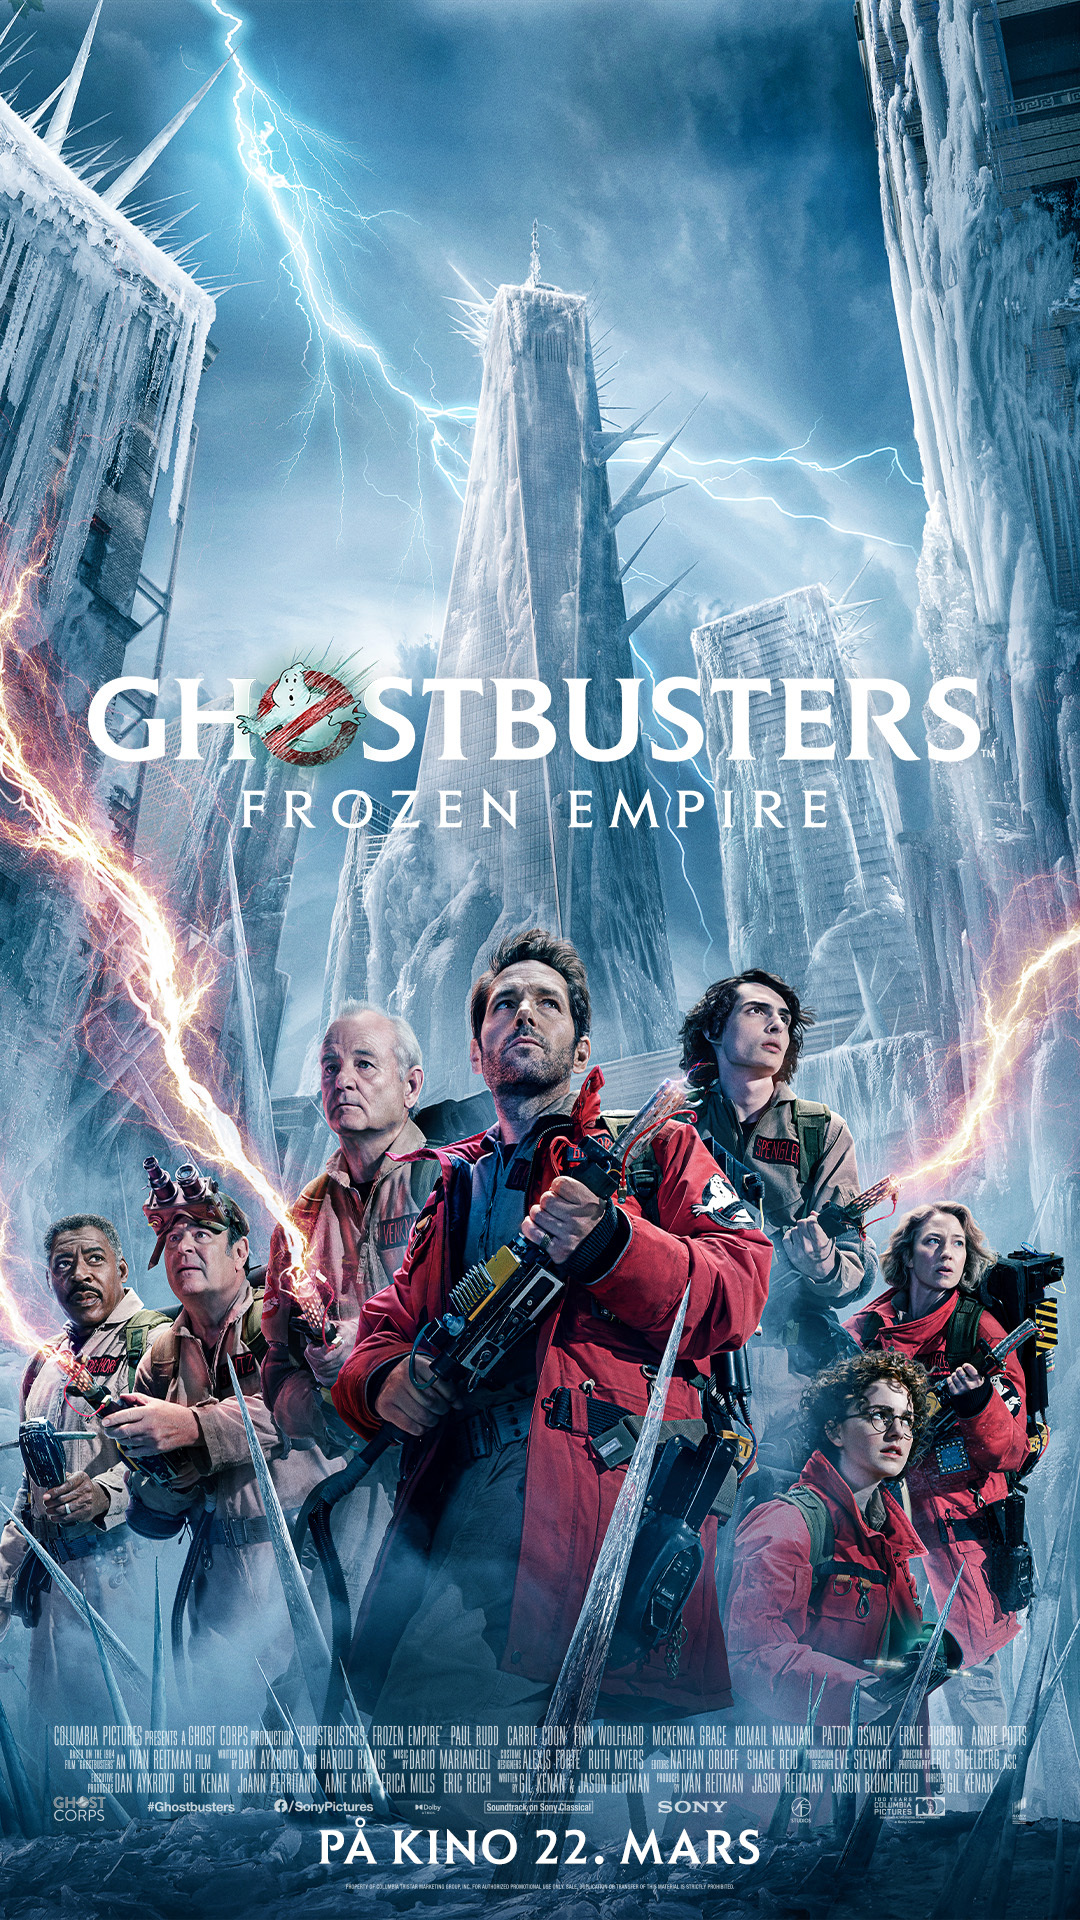 Kinoplakat for Ghostbusters: Frozen Empire